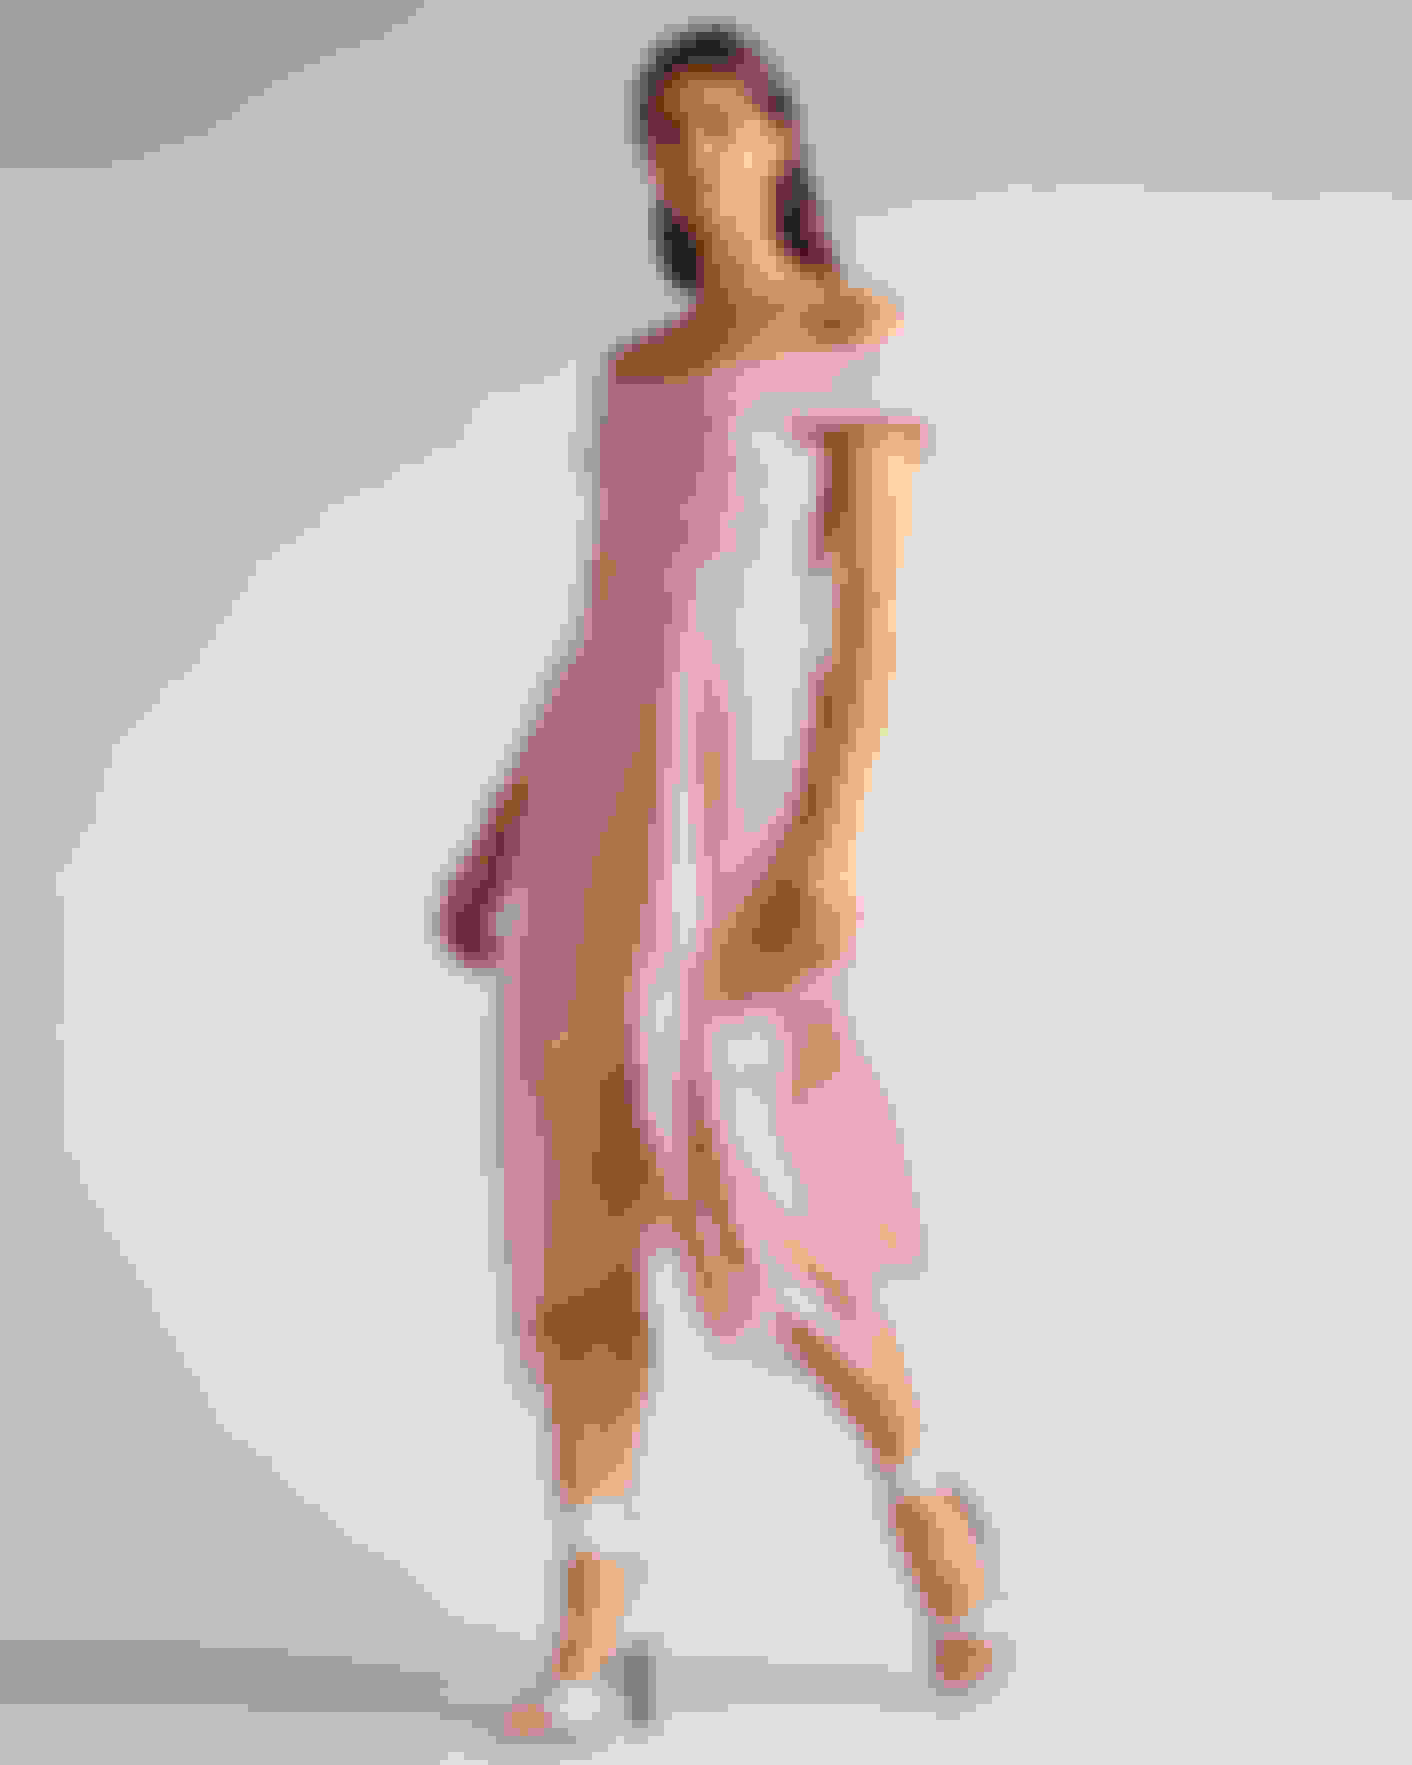 Dusky Pink Bardot Midi Dress With Ruffle Skirt Ted Baker